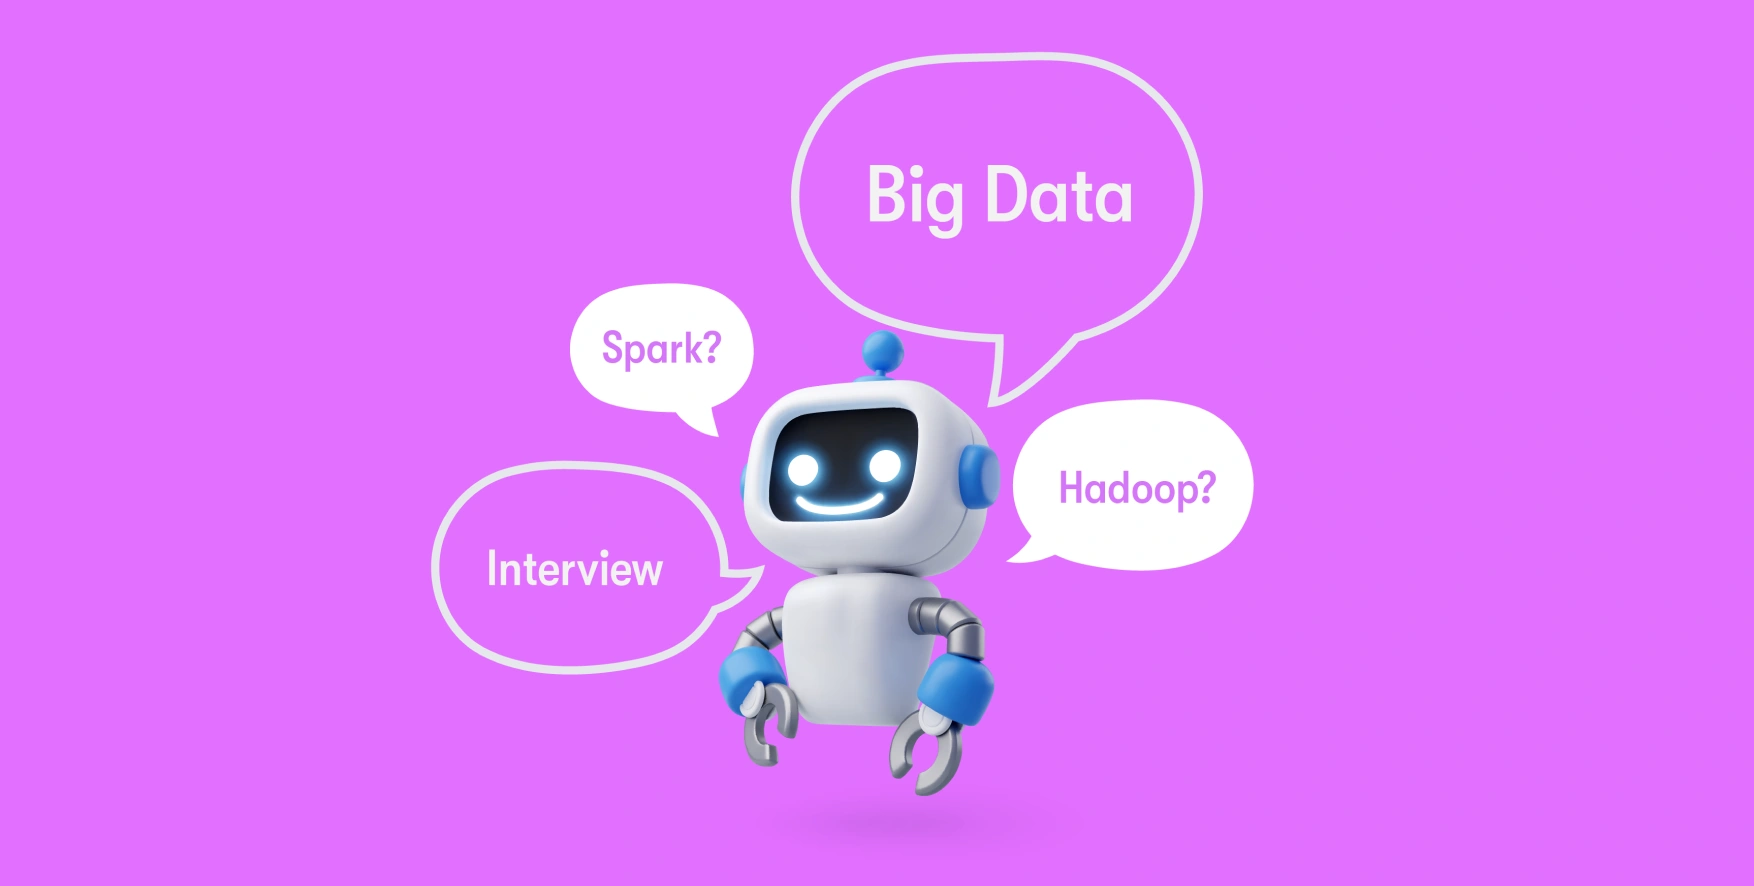 speech bubbles with words interview, big data, Hadoop, Spark, around the robot